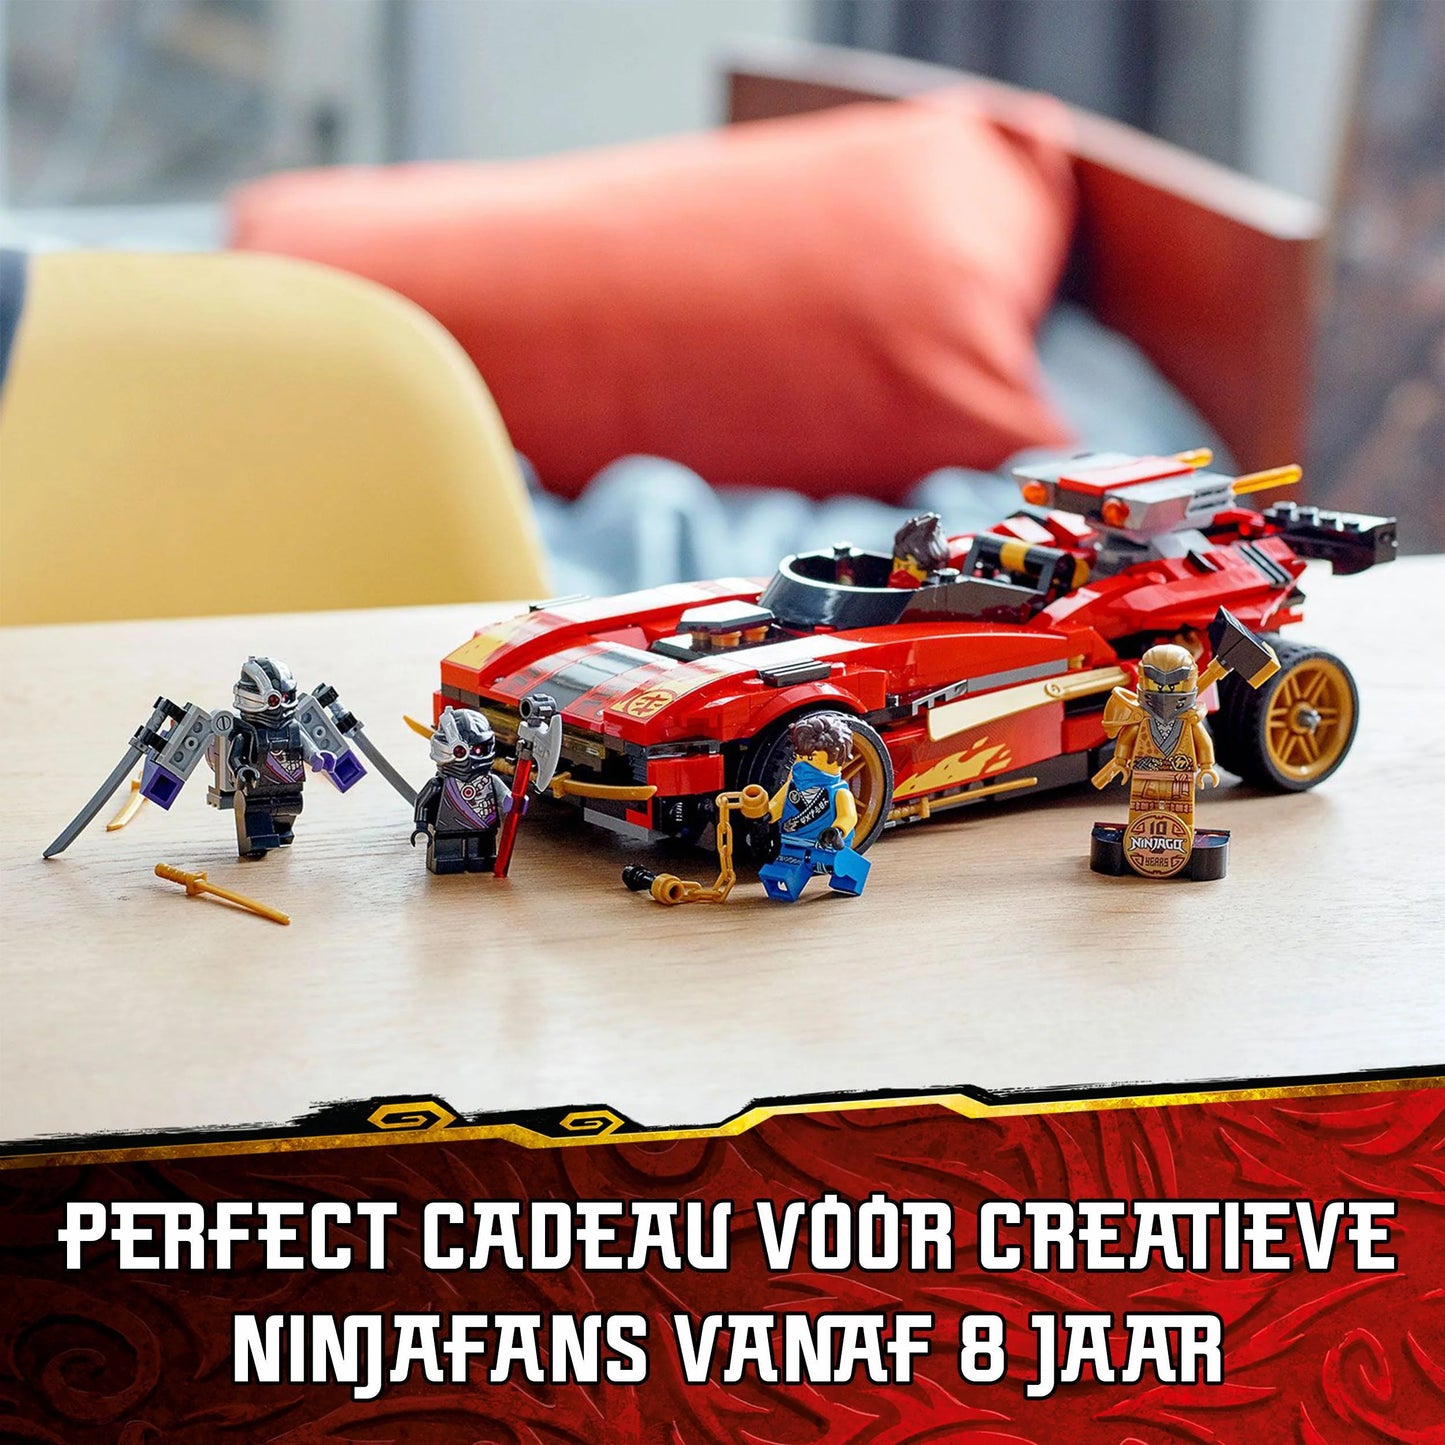 X-1 Ninja Charger-LEGO Ninjago